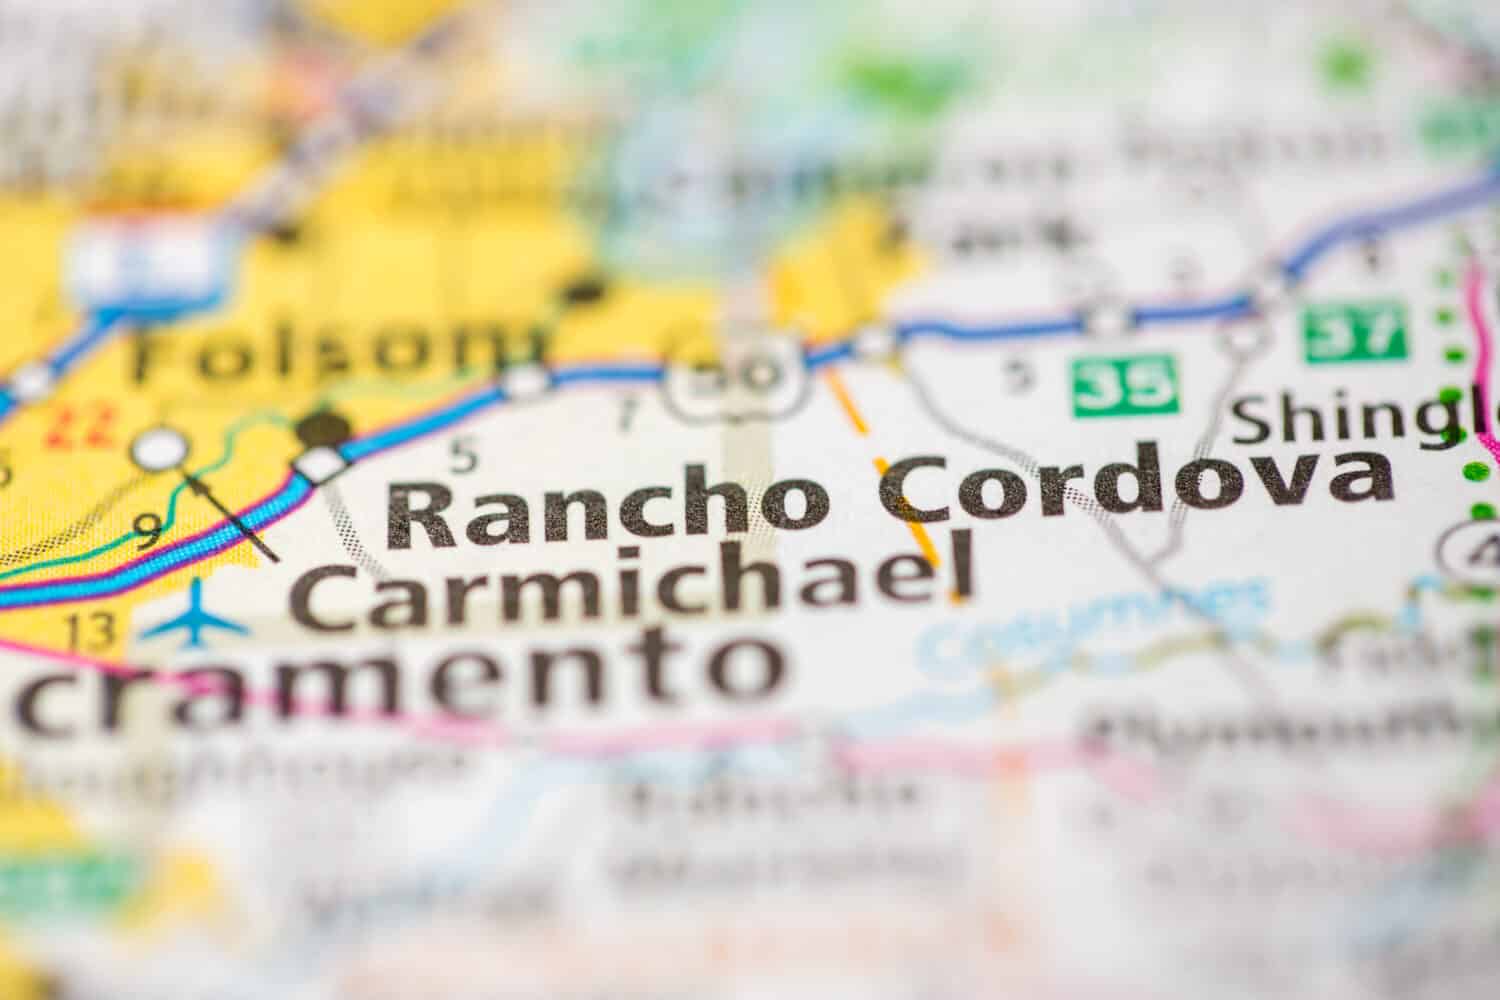 Rancho Cordova. California. USA